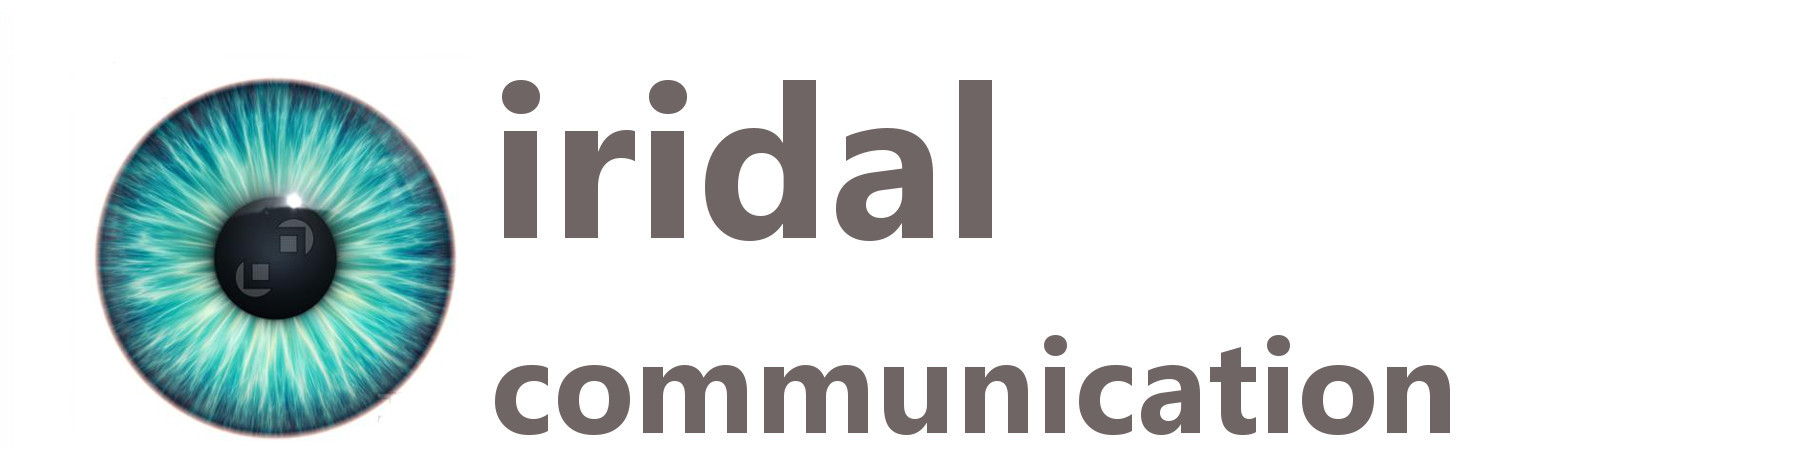 iridal communication